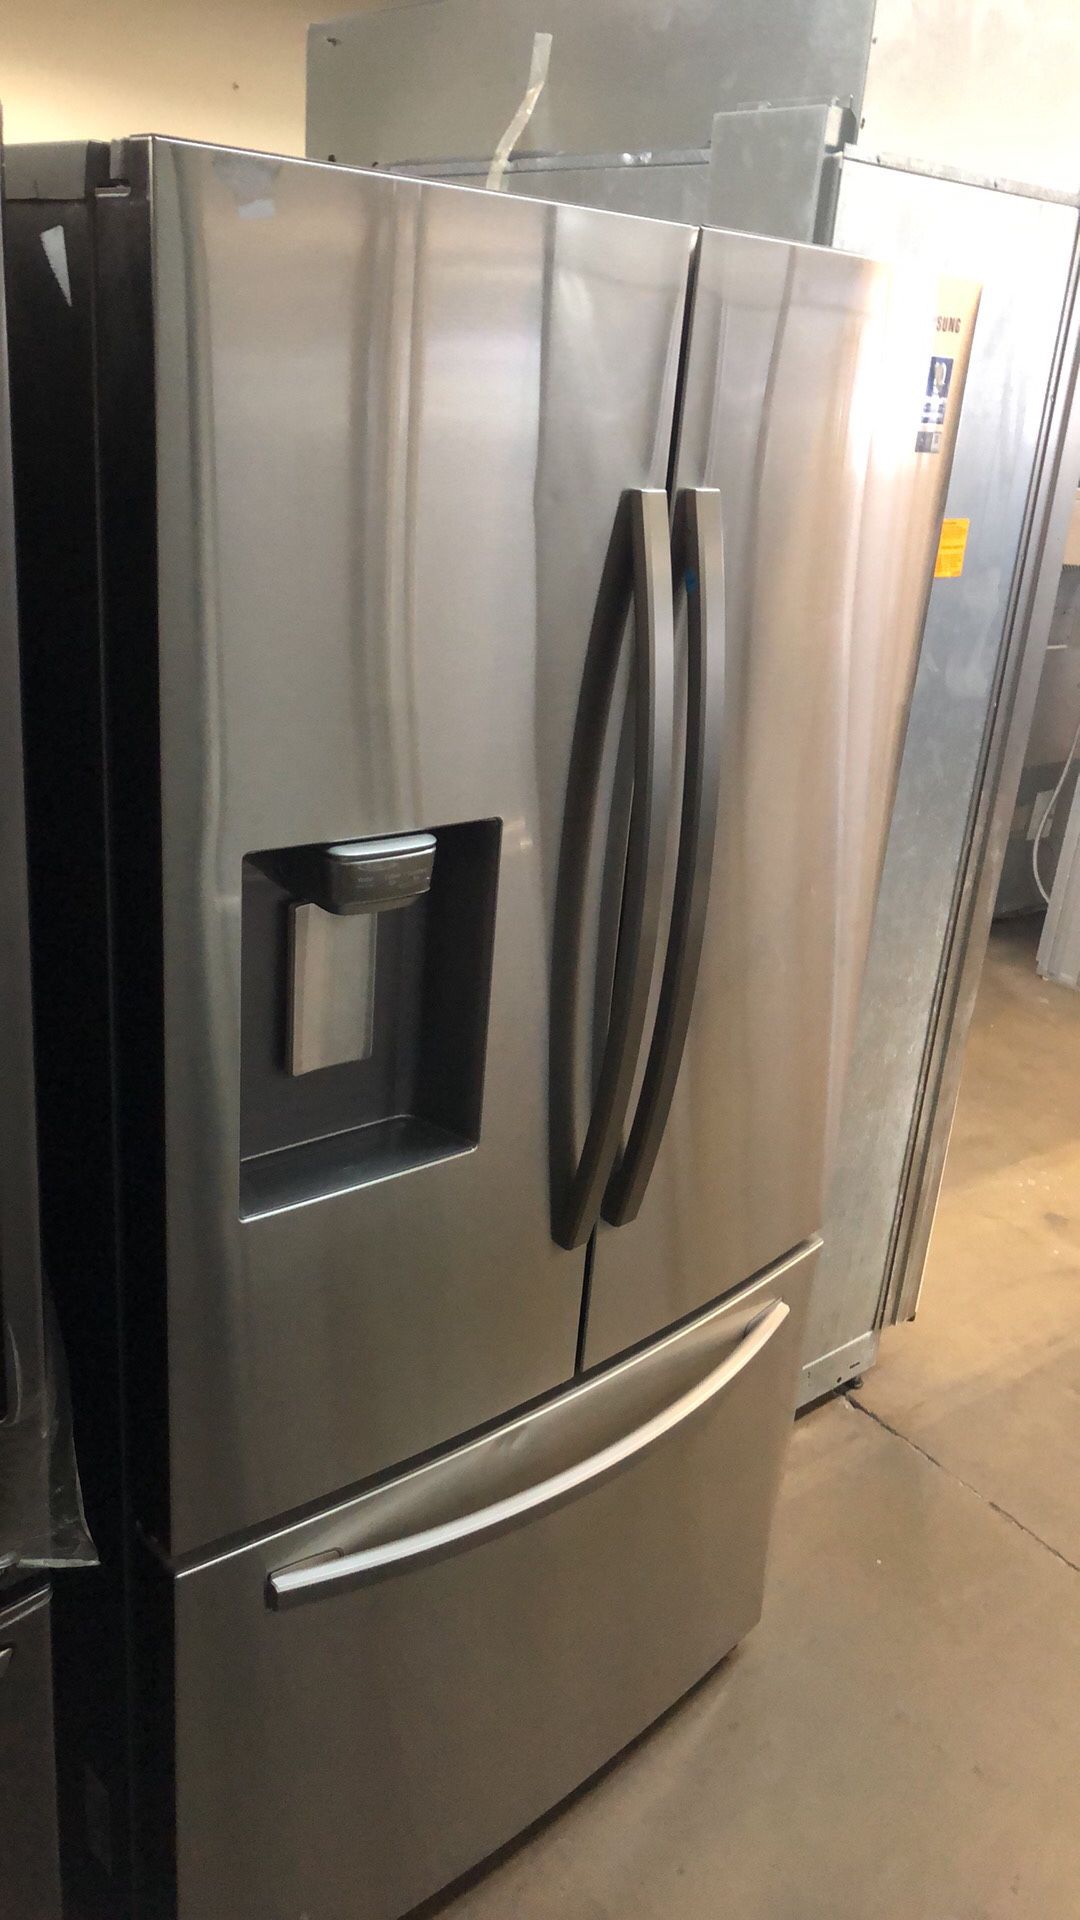 New Open Box Samsung Counter Depth Stainless Steel Refrigerator 